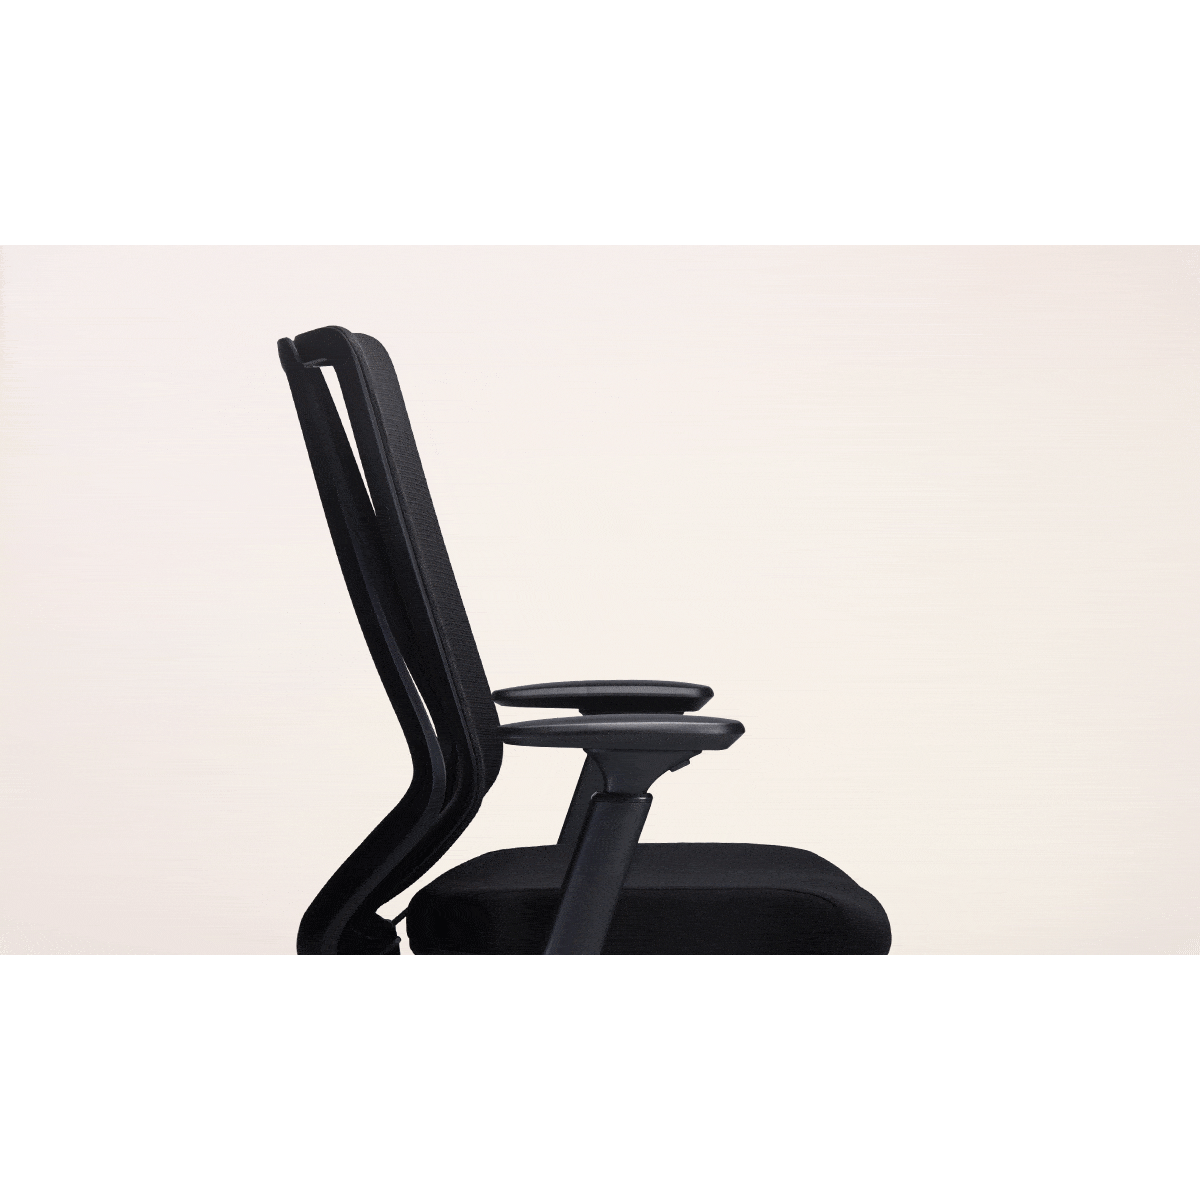 Voka Task Chair - Office Furniture Company 